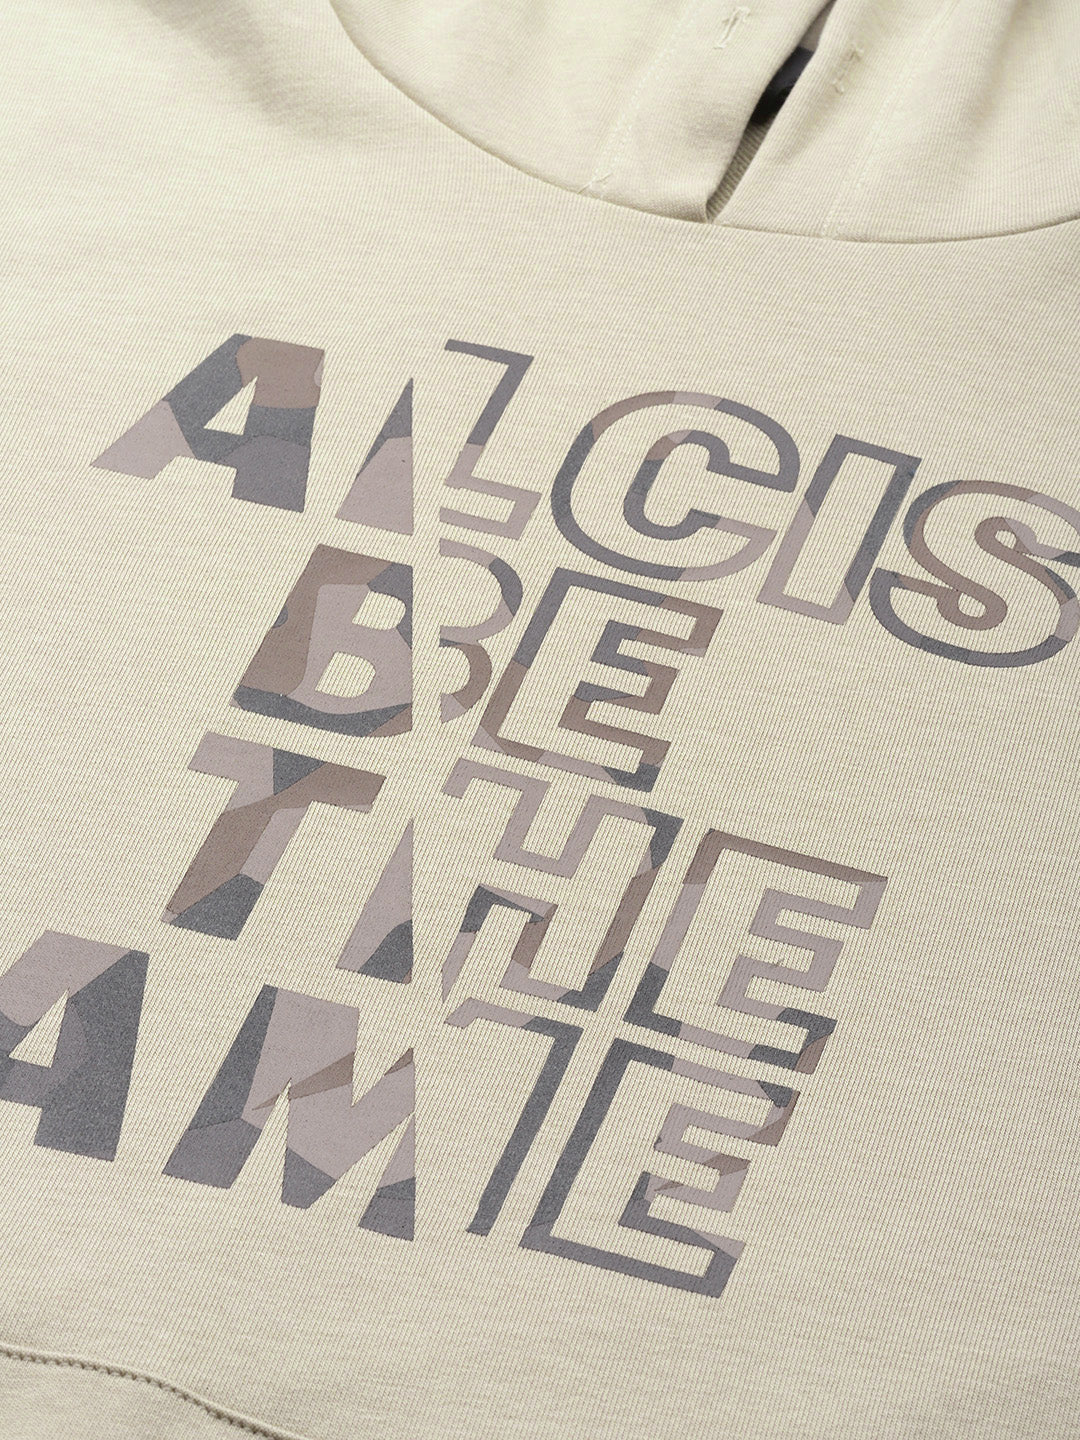 Alcis Men Cream-Coloured Printed Hooded Sweatshirt